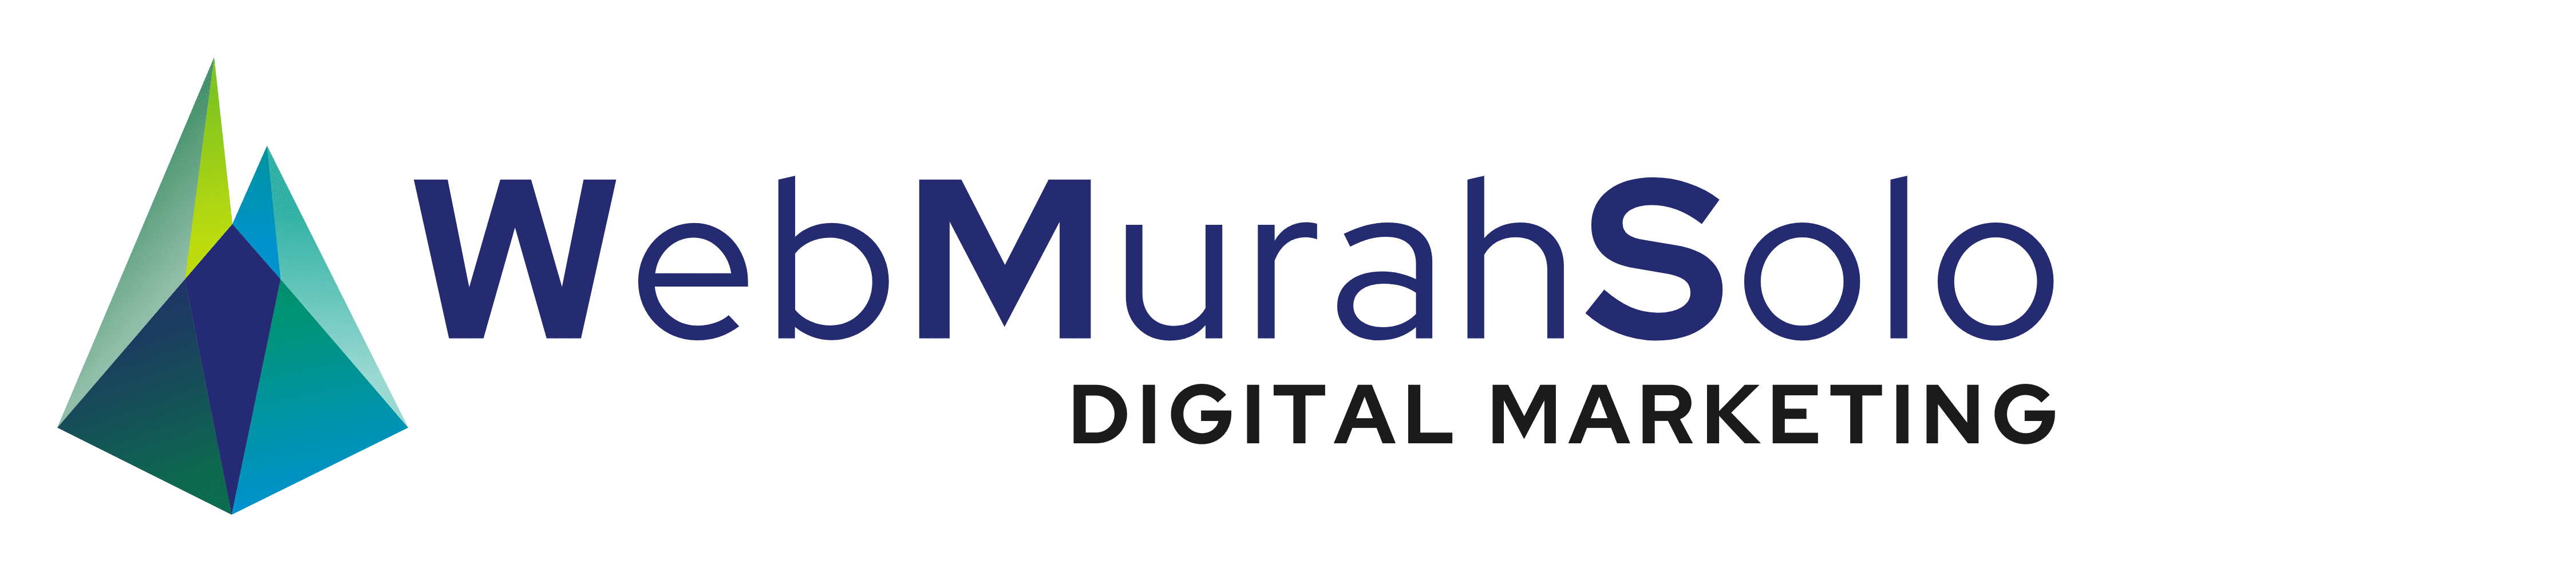 web murah solo logo